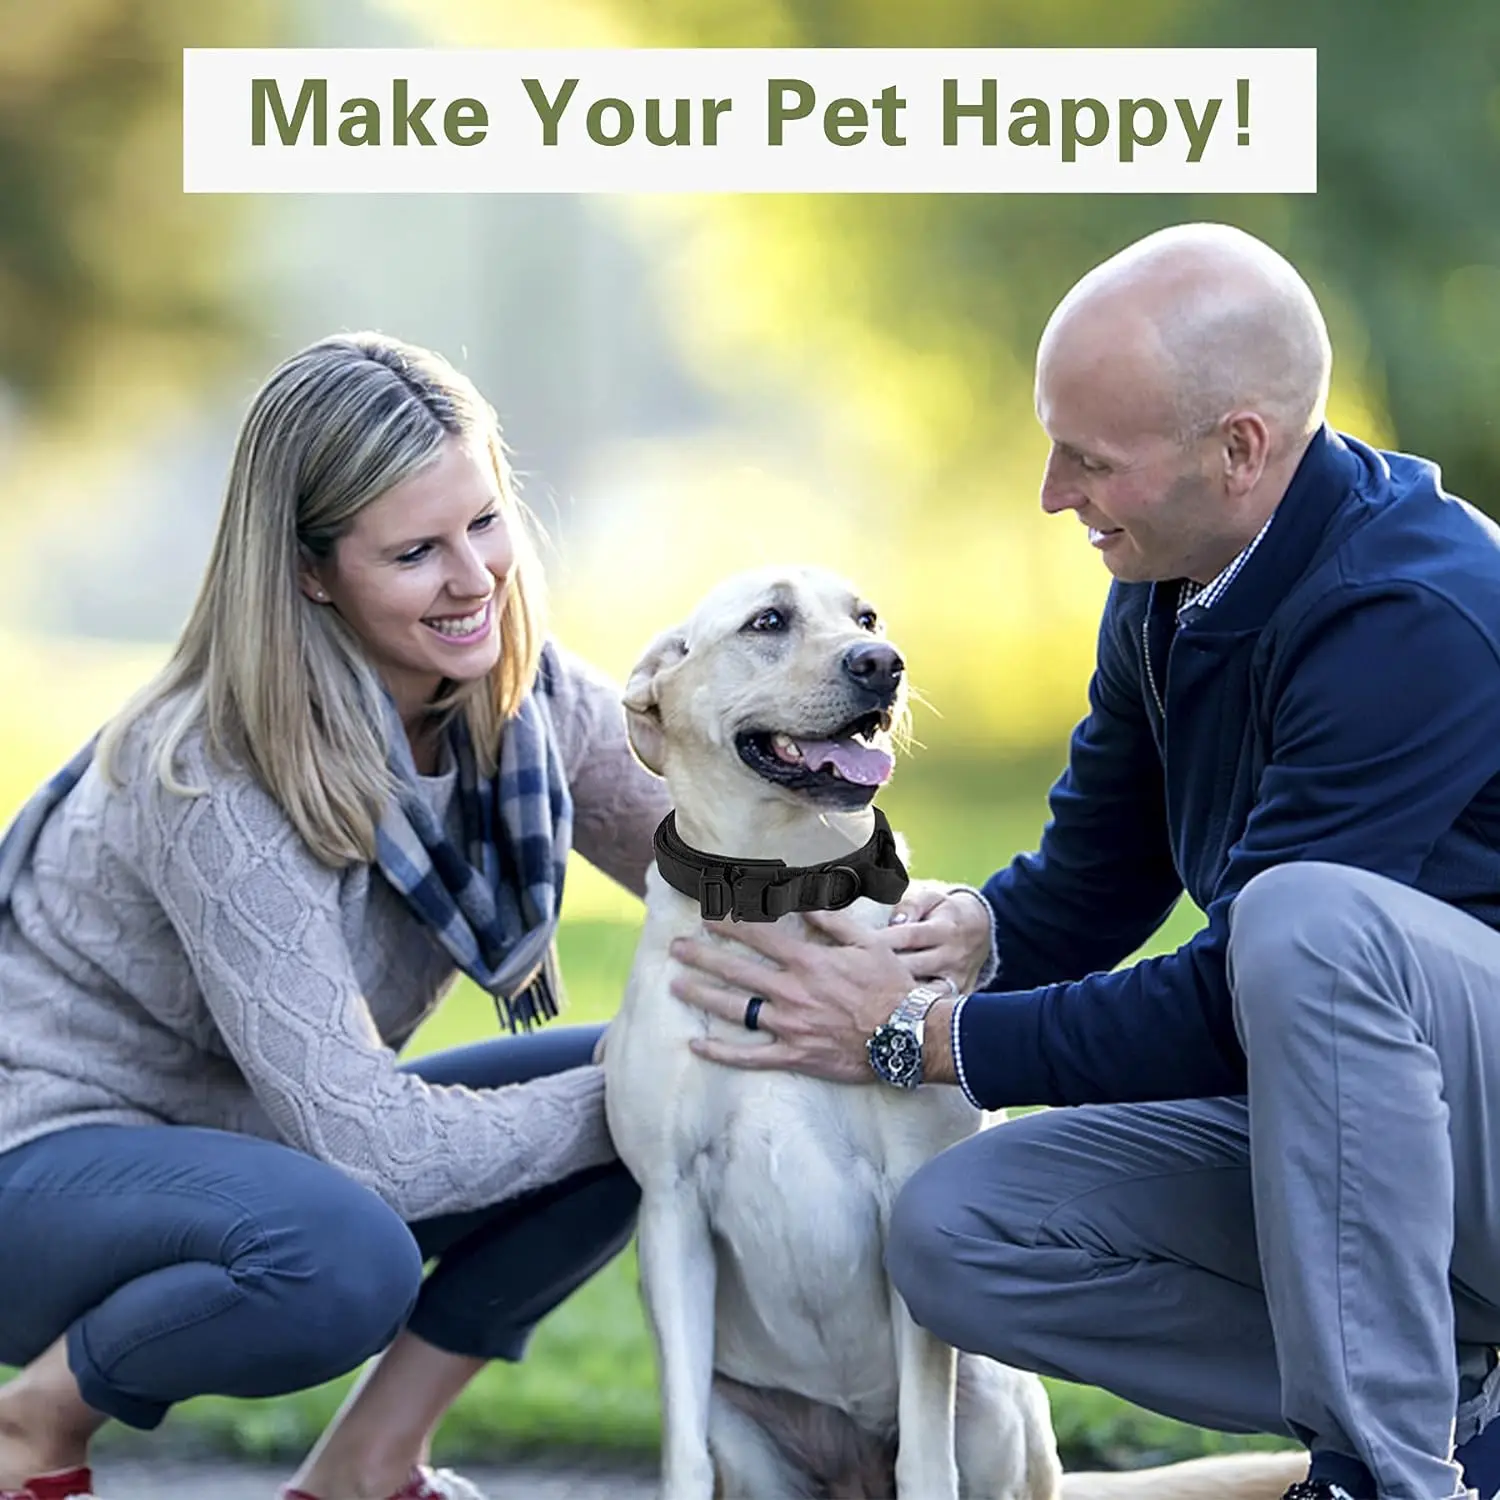 

Dog Collars Adjustable Training Dog Collar With Locking Buckle Comfortable Non-Slip Dog Walking Cord For Large/Medium Dogs